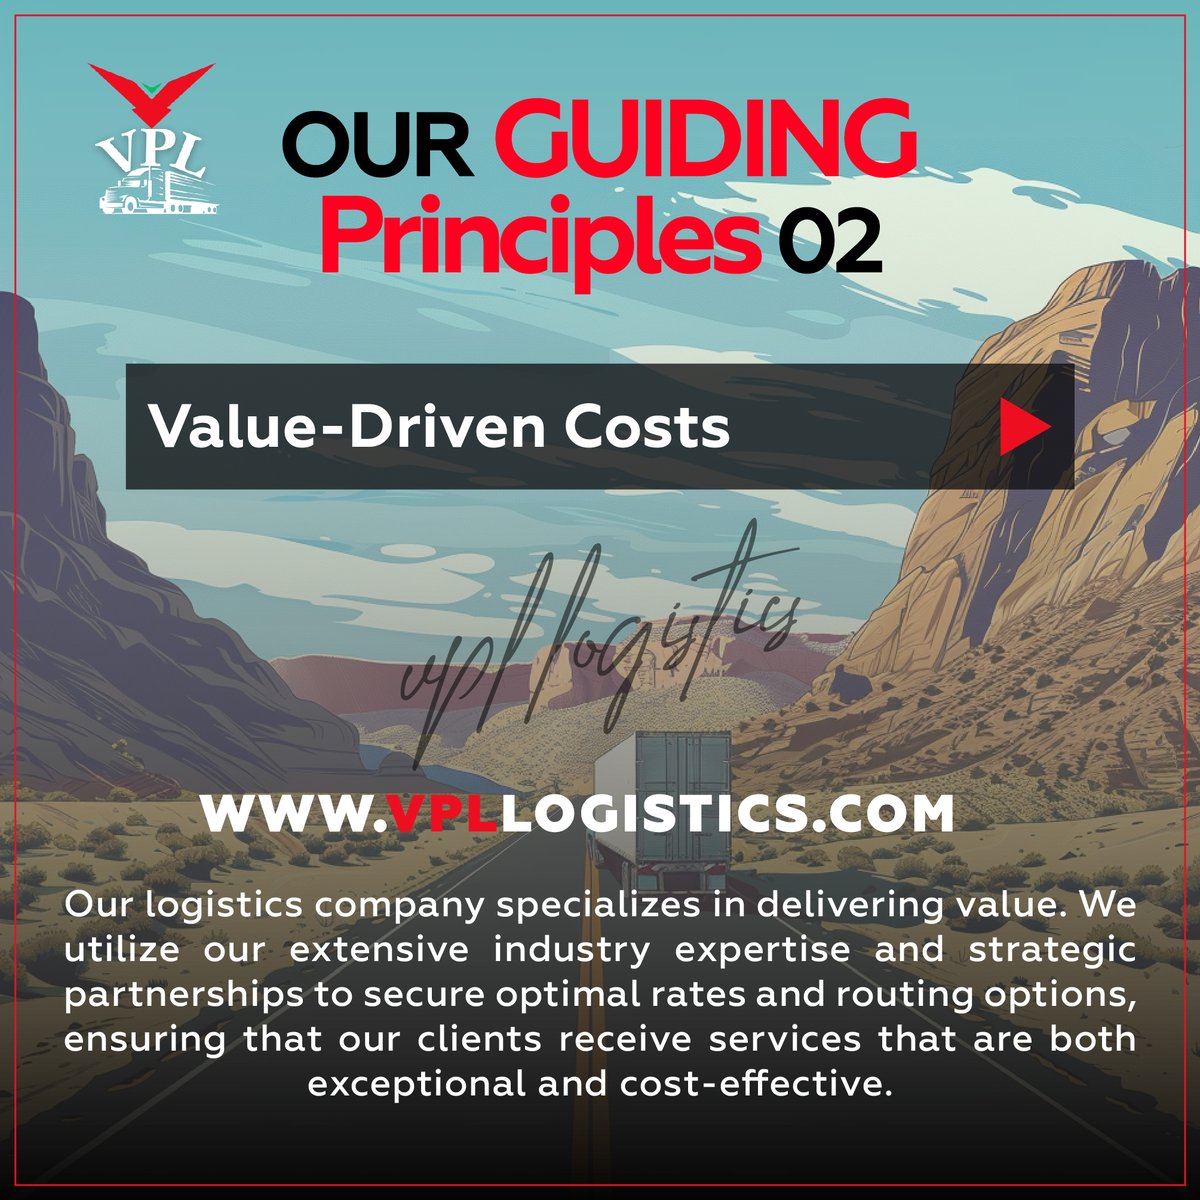 Value-Driven Costs

Our logistics company specializes in delivering value.

#vpllogistics #freightrecession #vensplailogistics